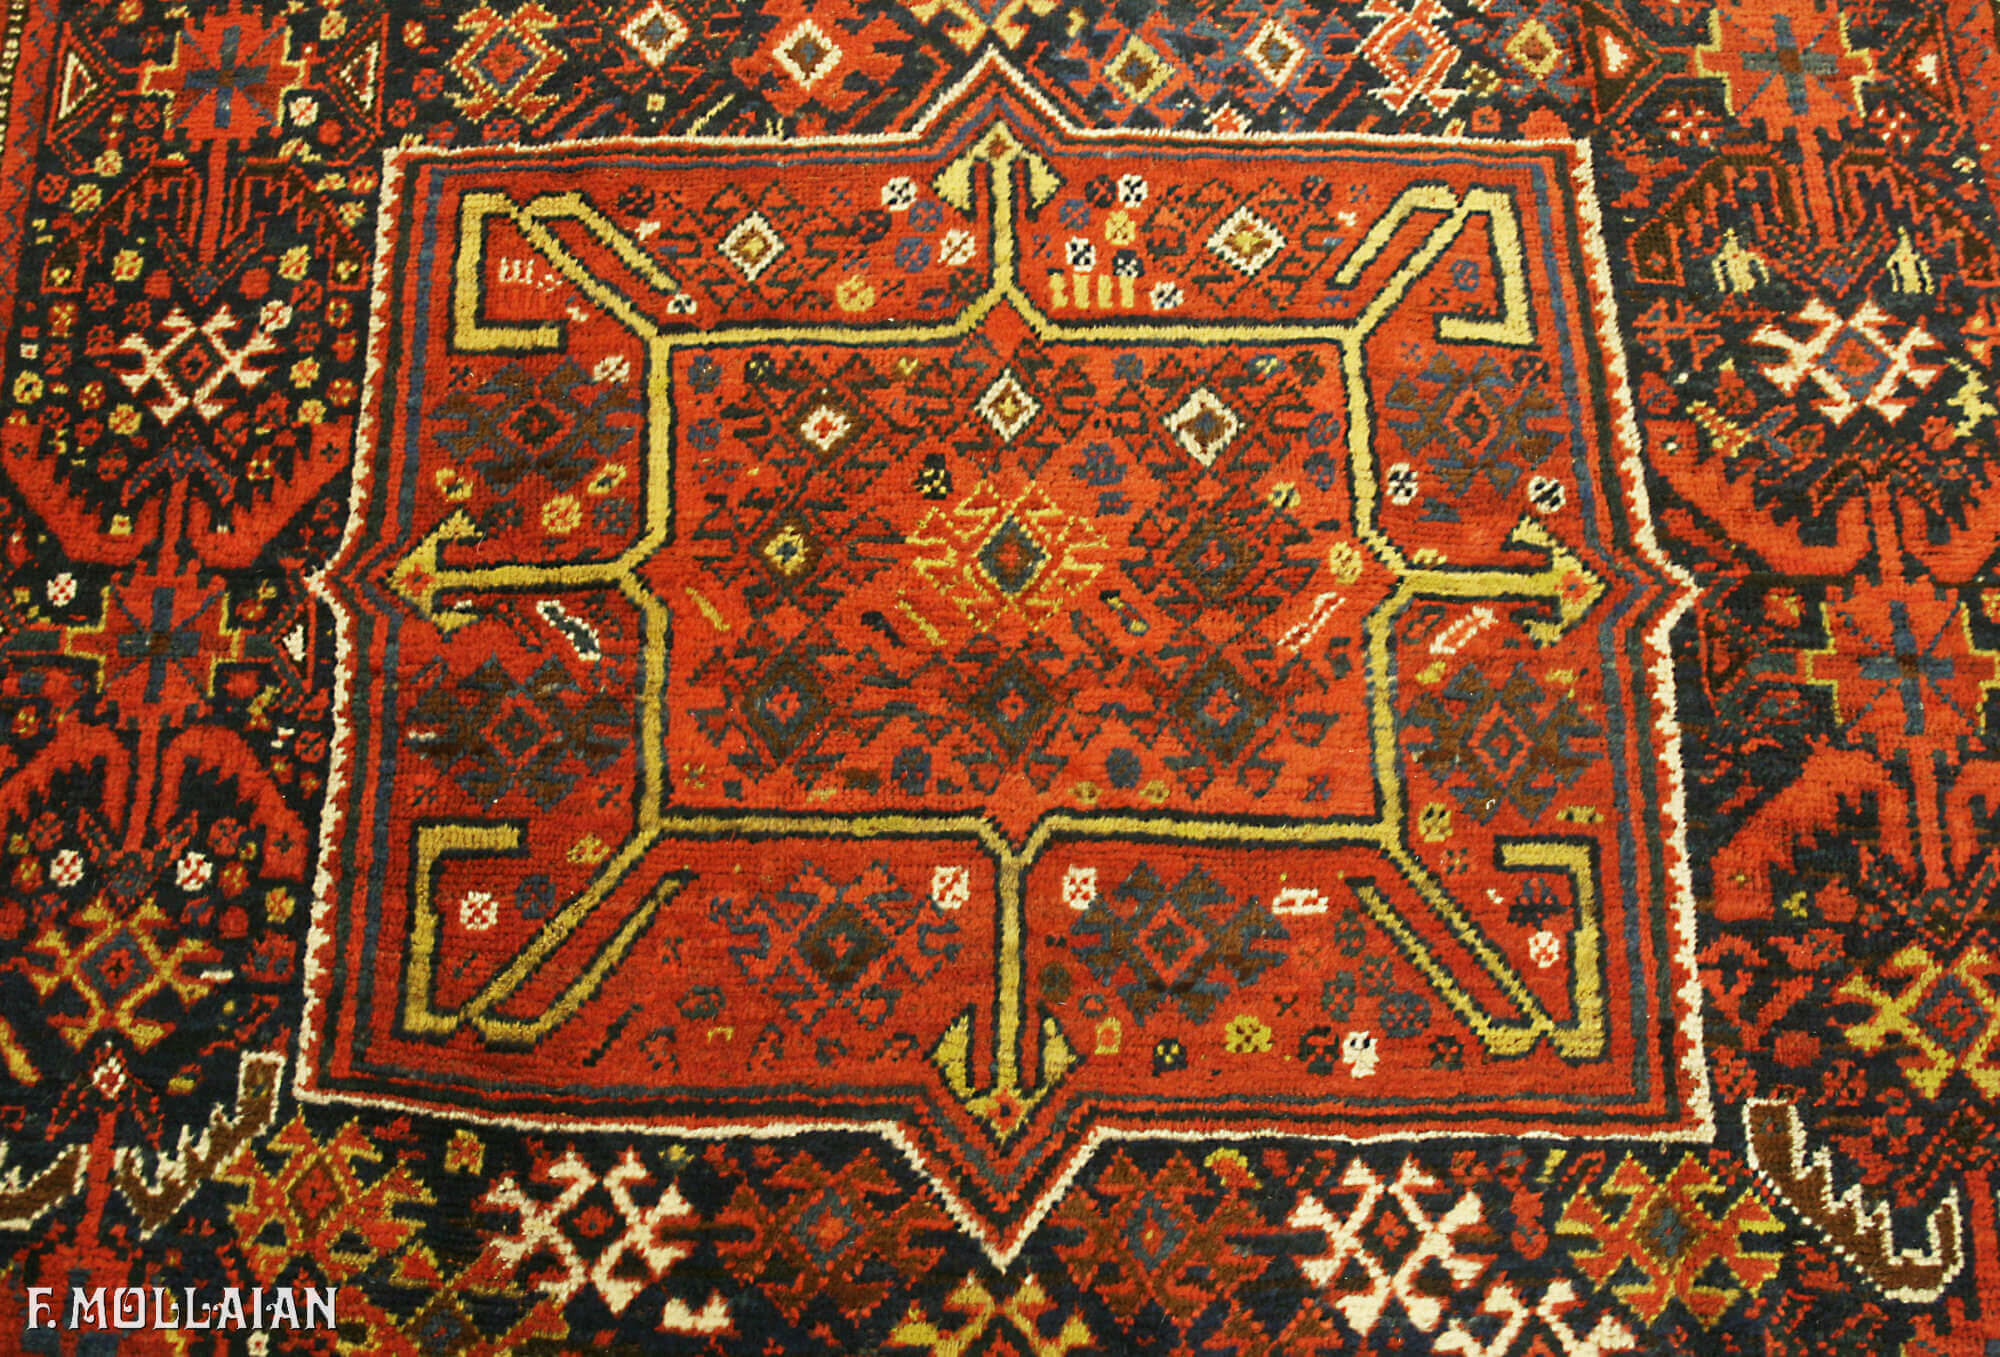 Antique Persian Khamse Carpet n°:70115487